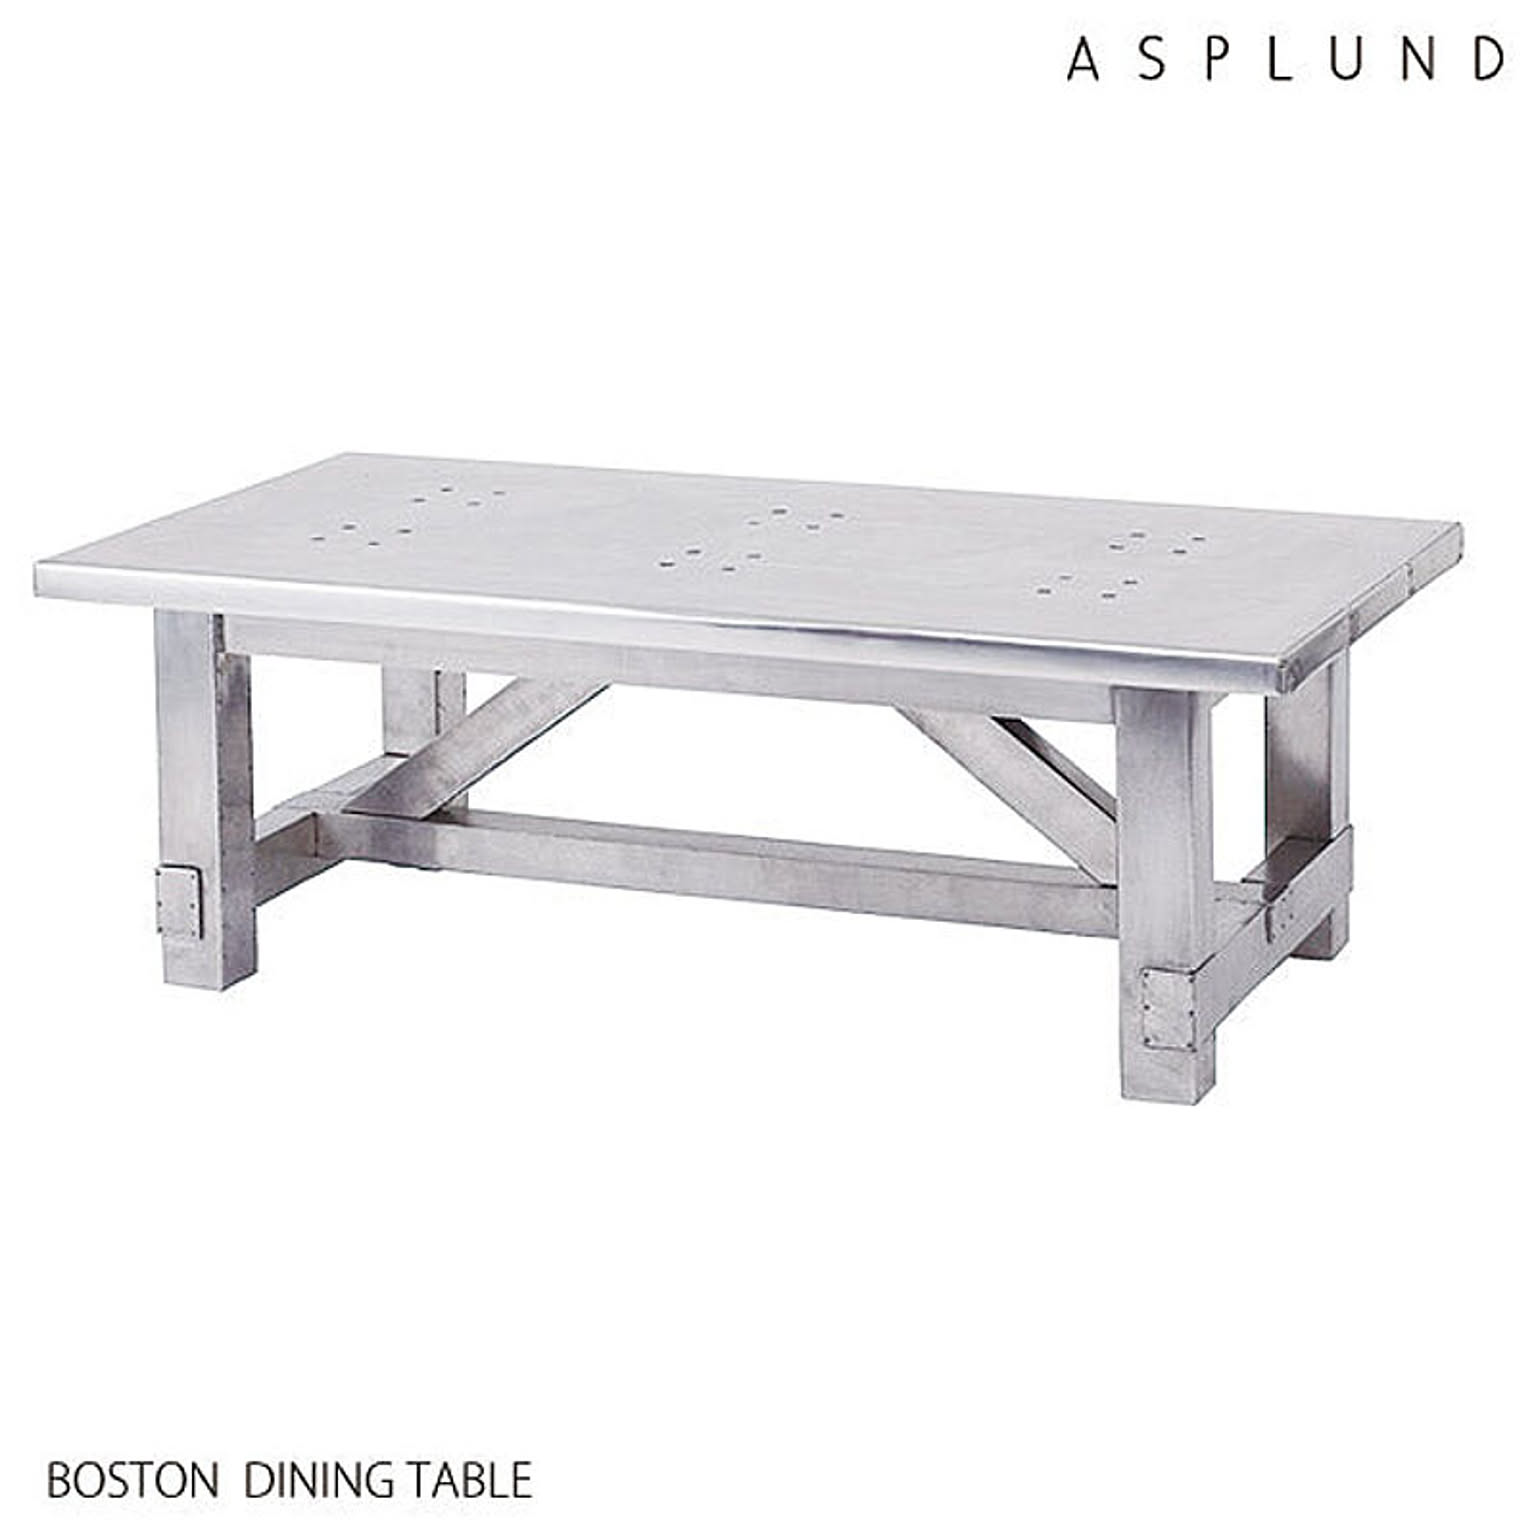 ASPLUND ダイニングテーブル HALO BOSTON 幅180奥行80高さ73 アルミニウム ダメージ加工 シルバー色